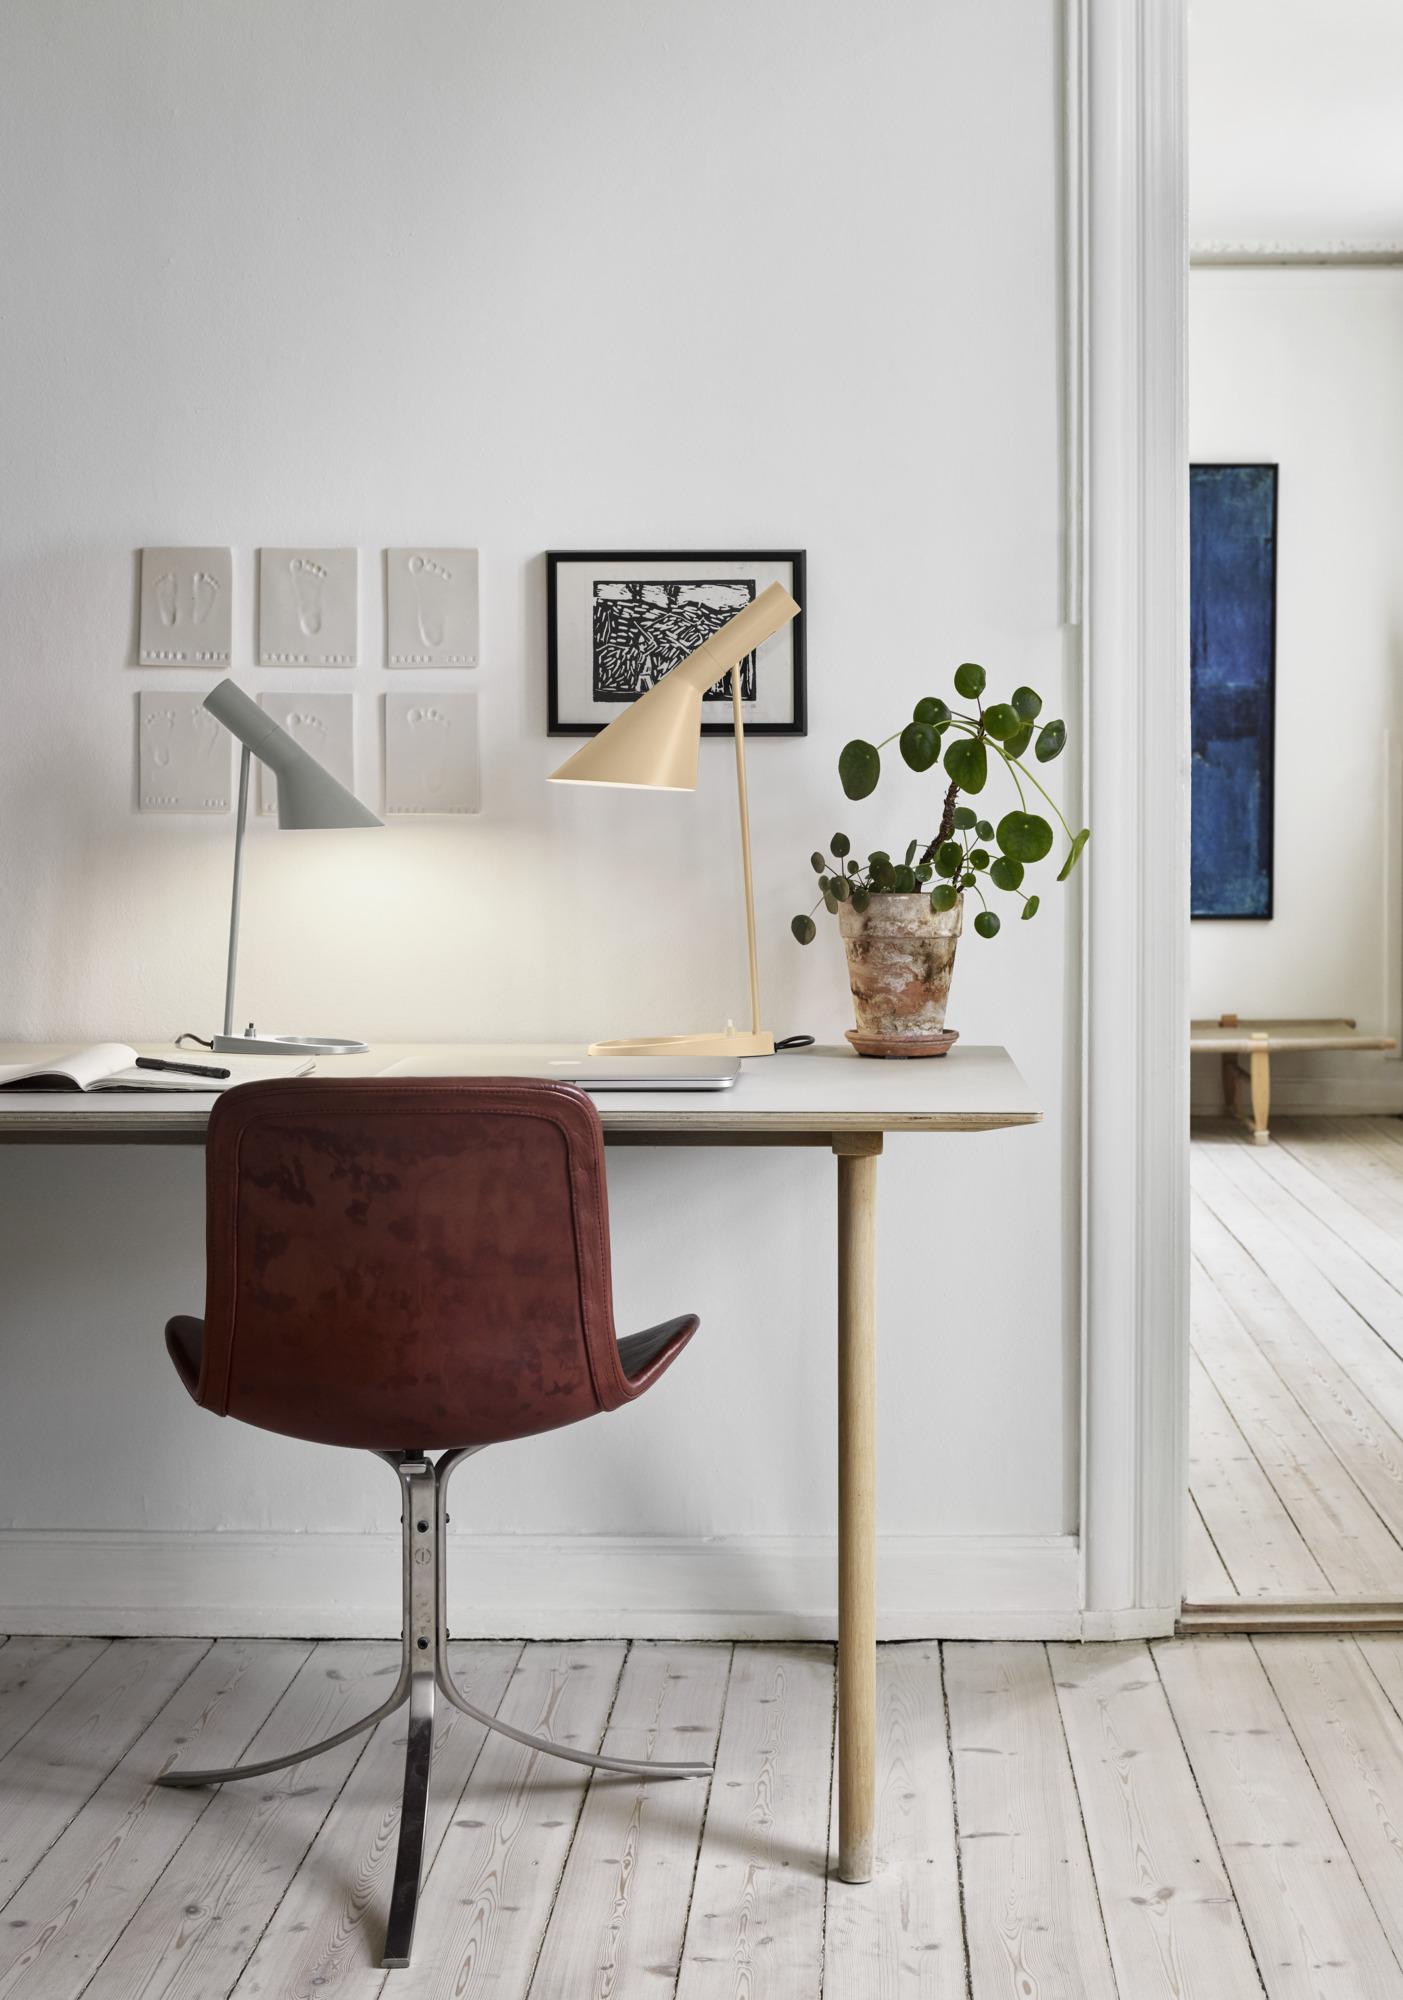 Steel Arne Jacobsen 'Aj Mini' Table Lamp in Electric Orange for Louis Poulsen For Sale